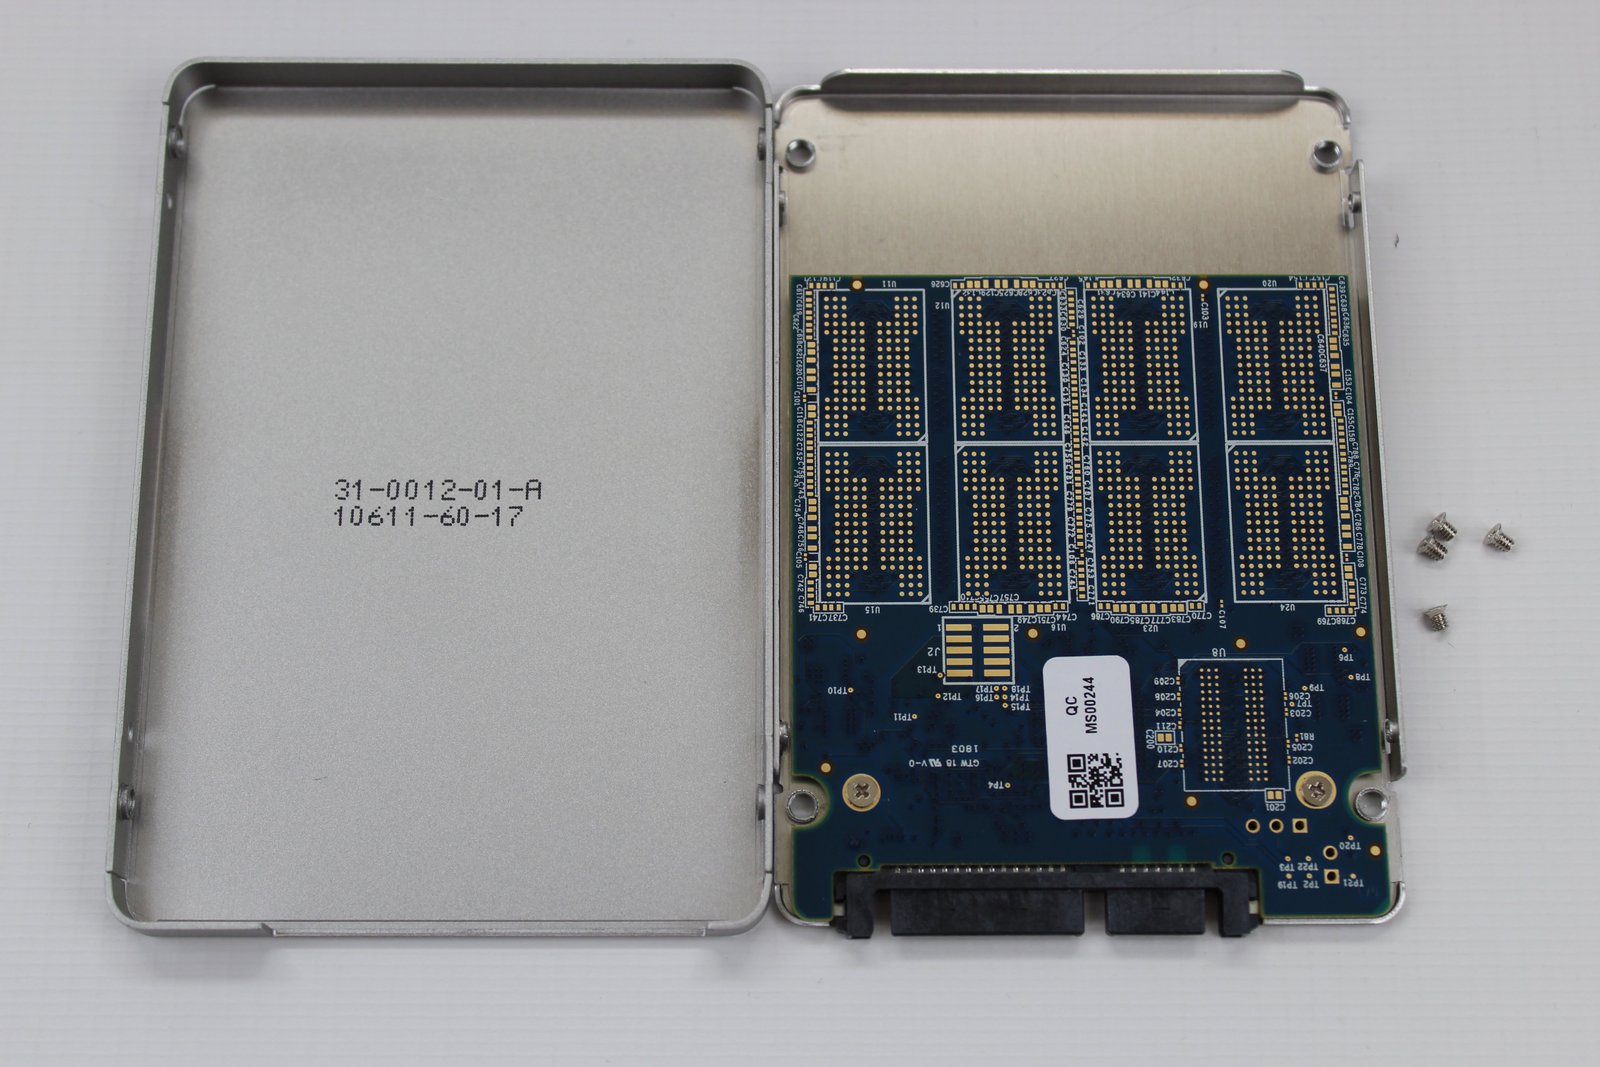 Crucial MX500 250GB SSD Storage Review 